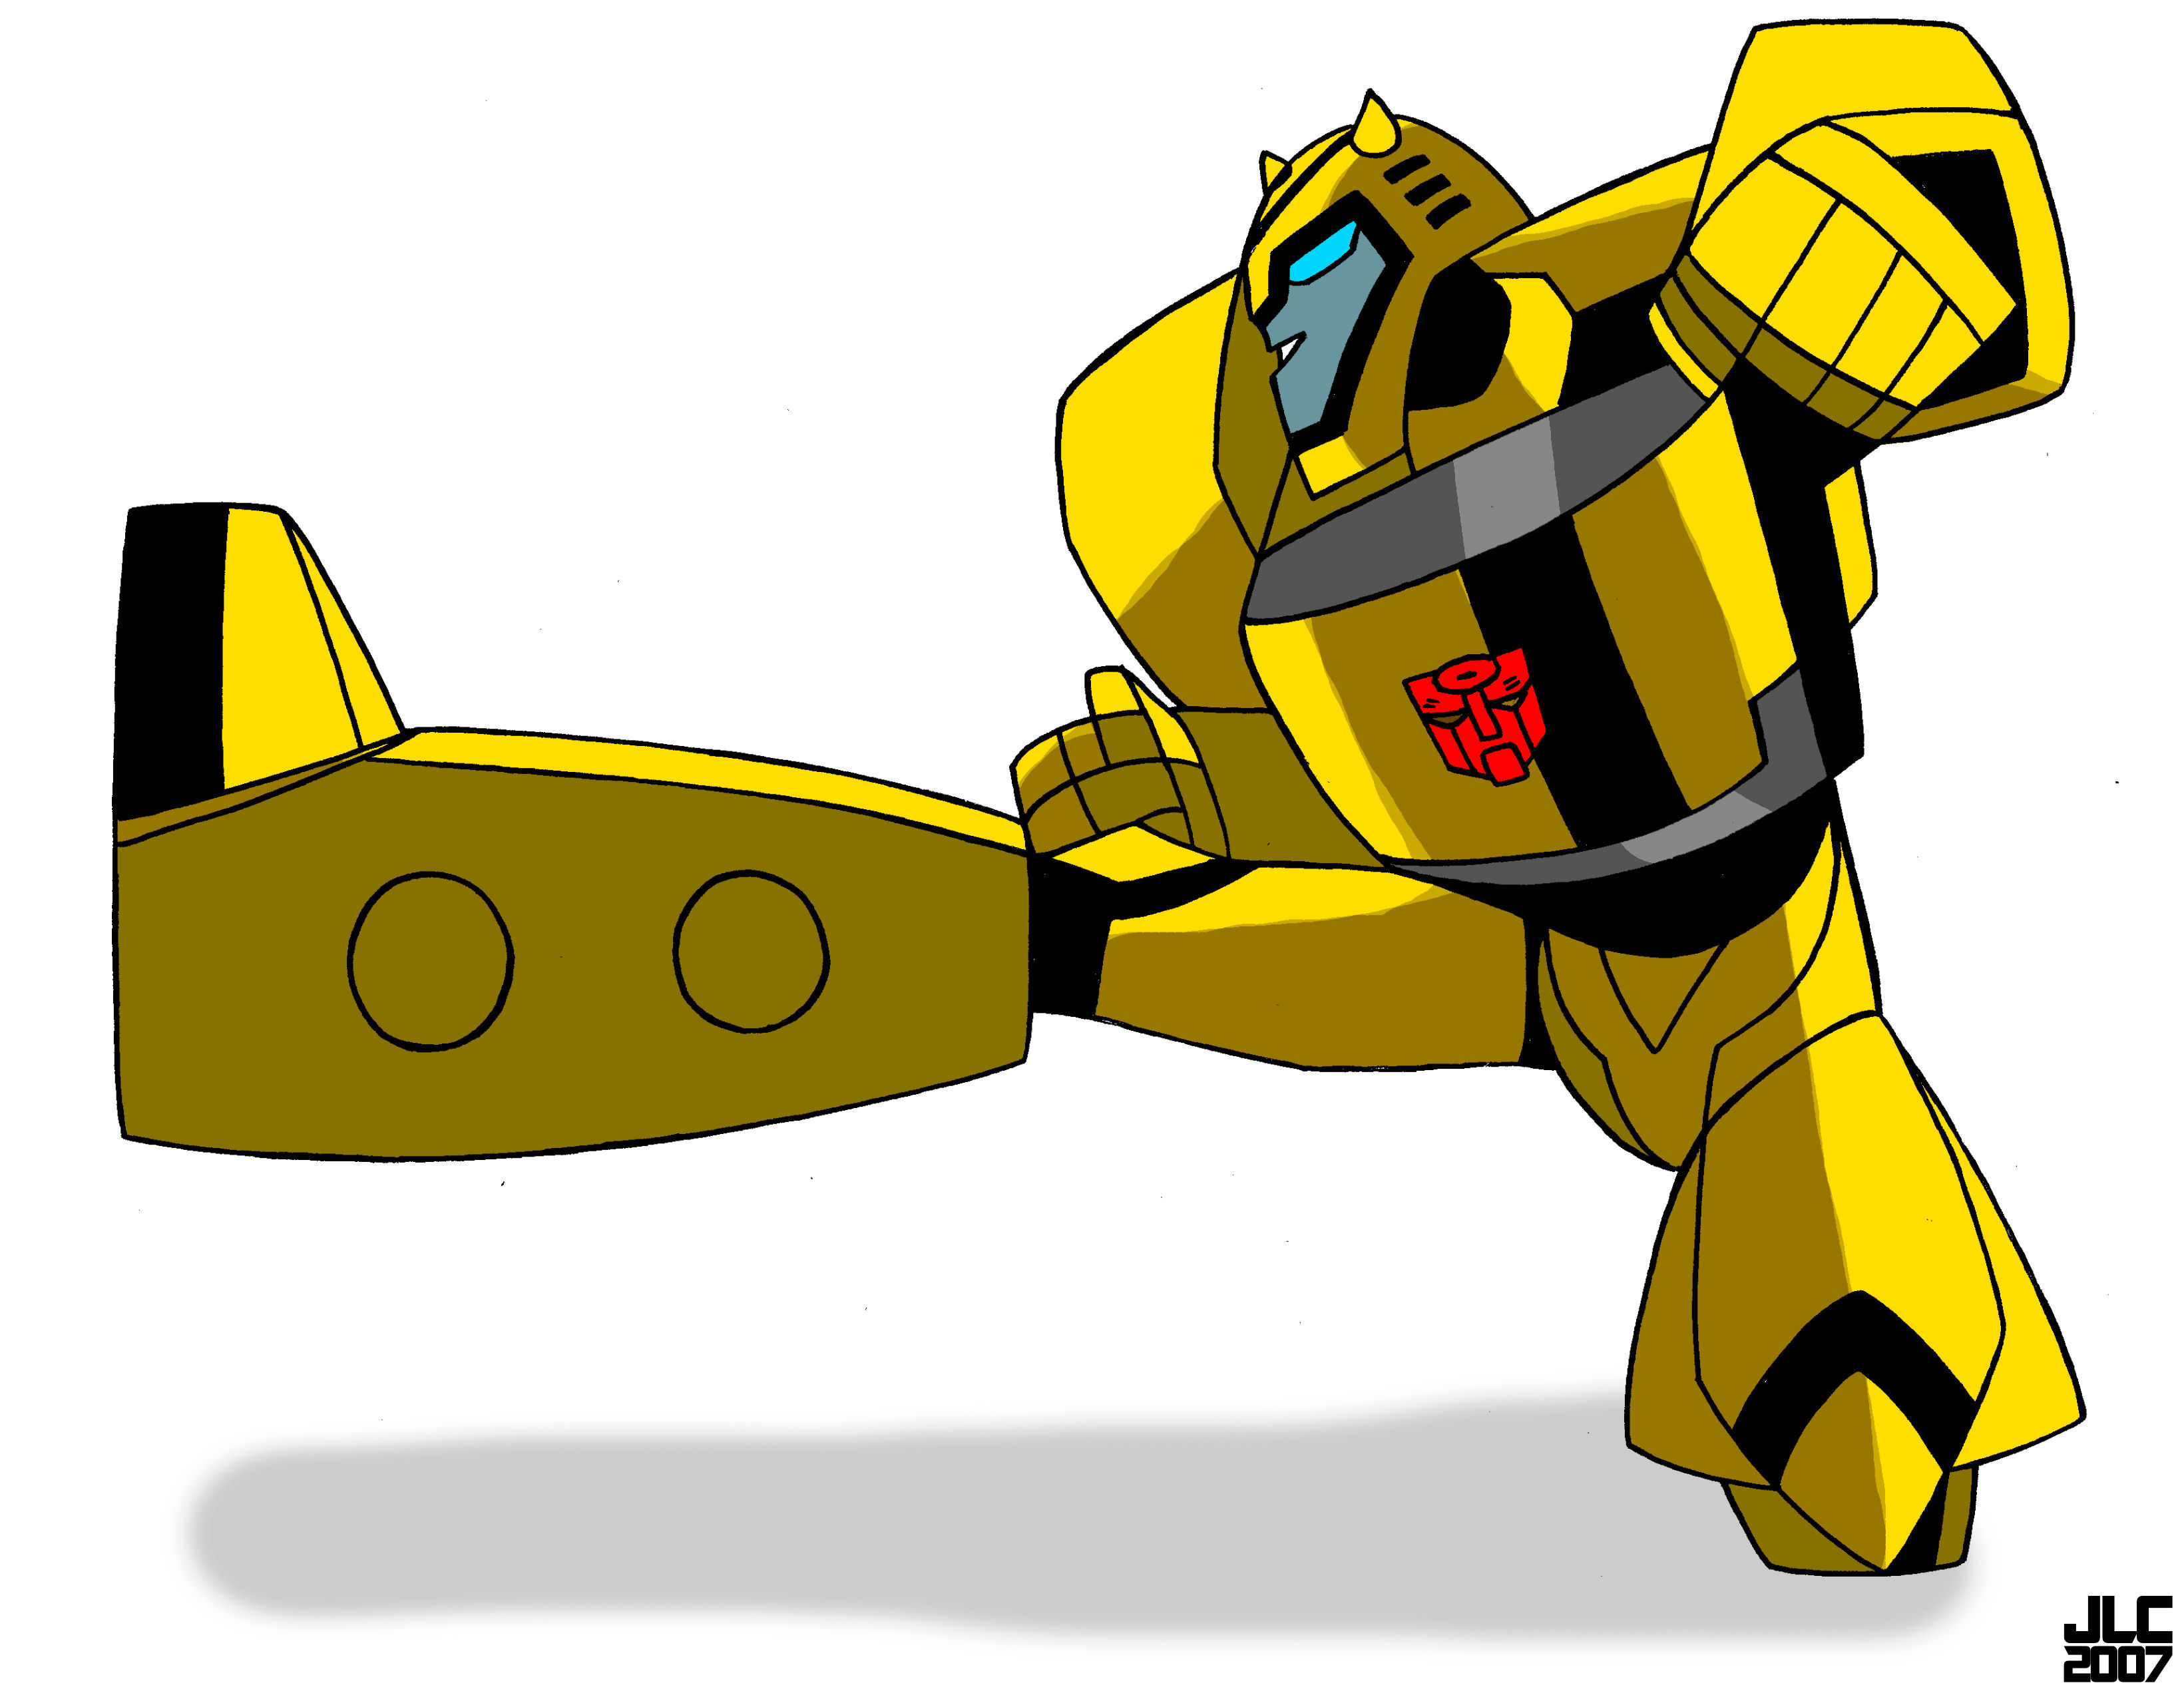 bumblebee: el mejor autobot - Taringa!